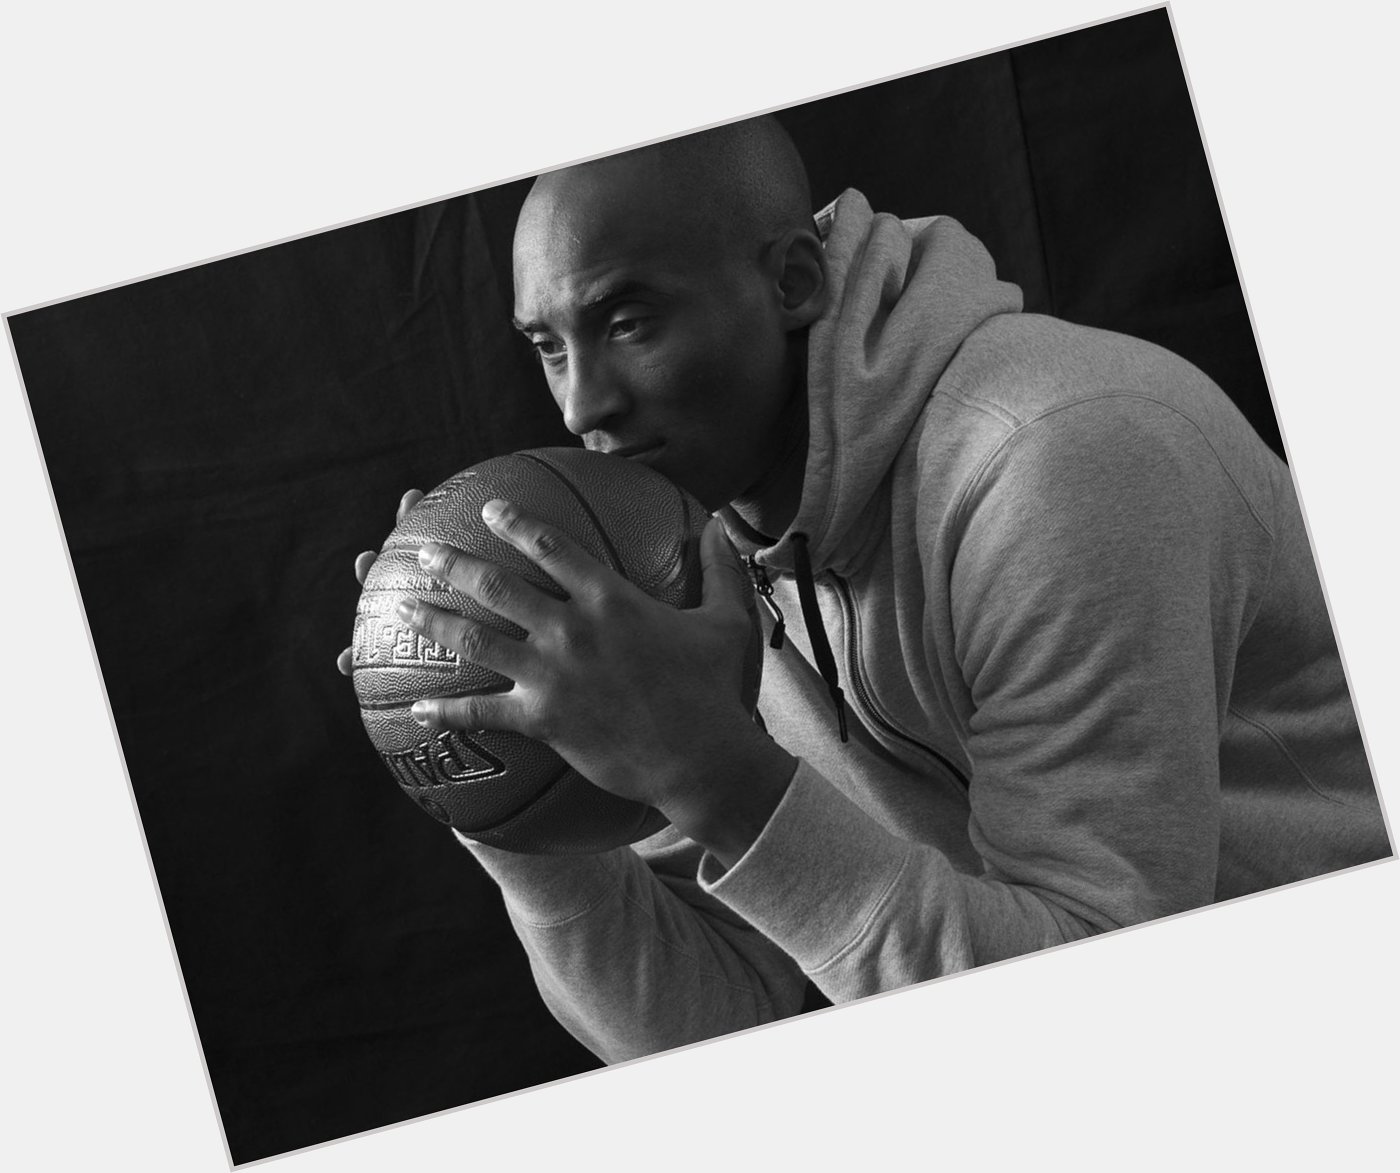 Happy 44th birthday to Kobe Bryant, everyday you are missed. 